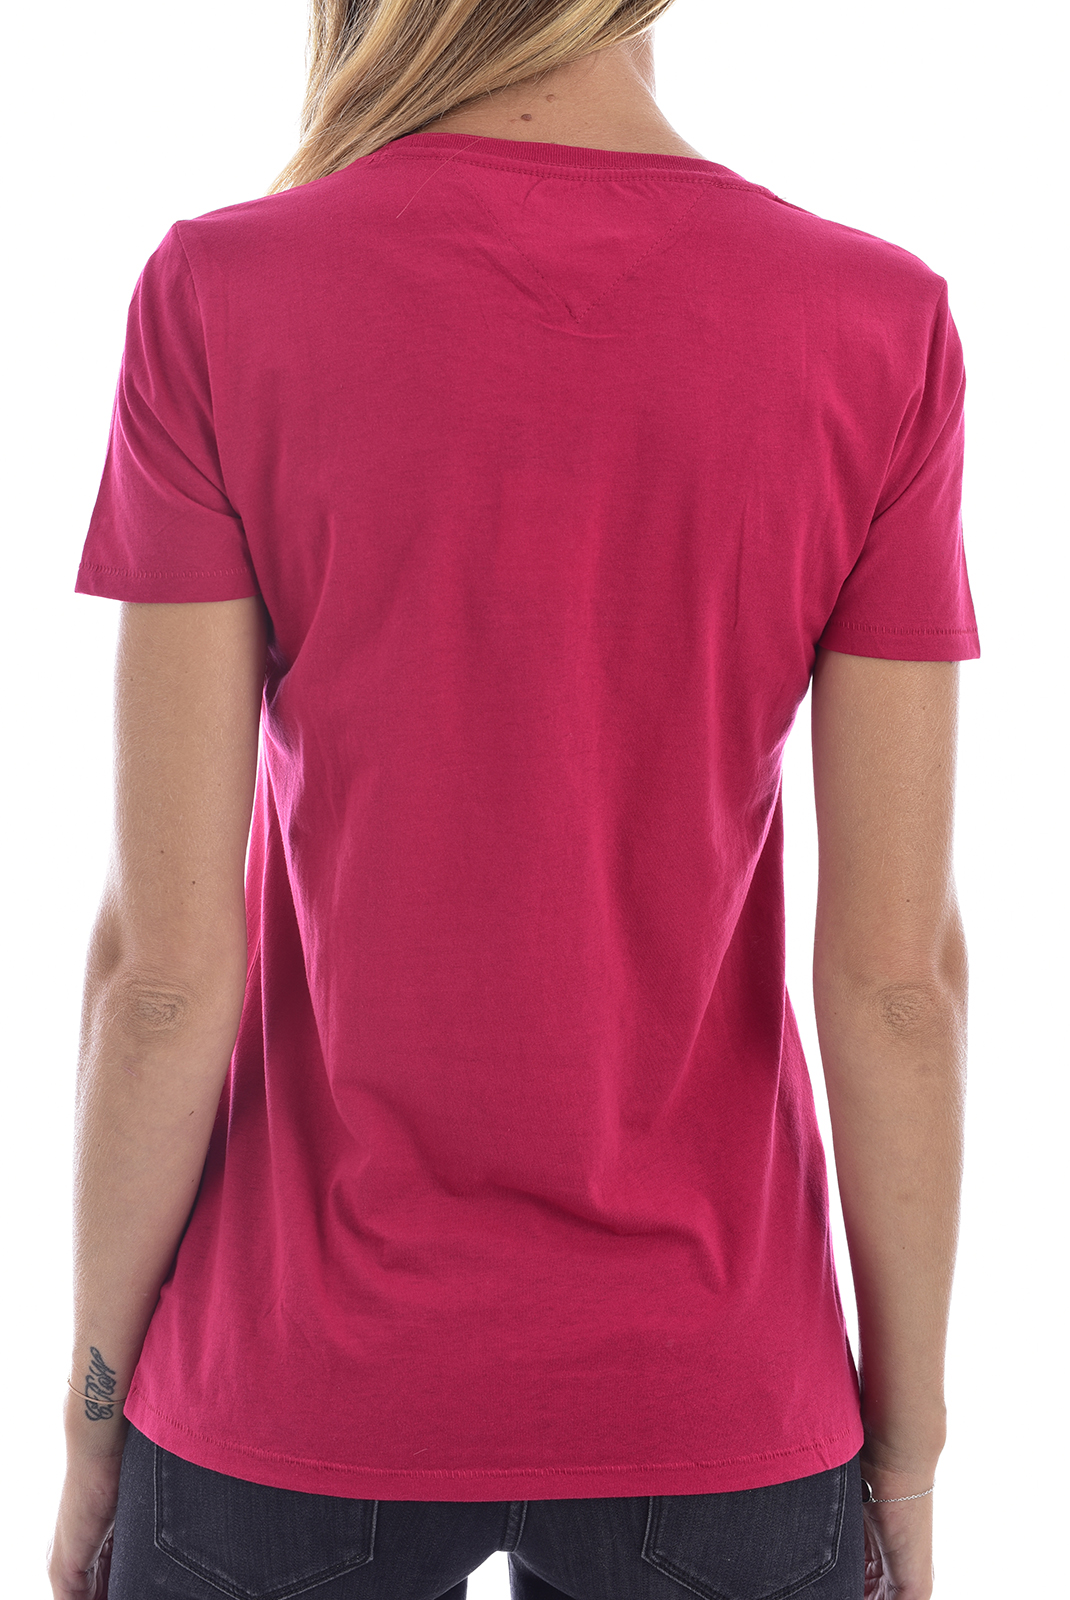 Tee-shirt rose printé Tommy Jeans - Dw0dw04399684